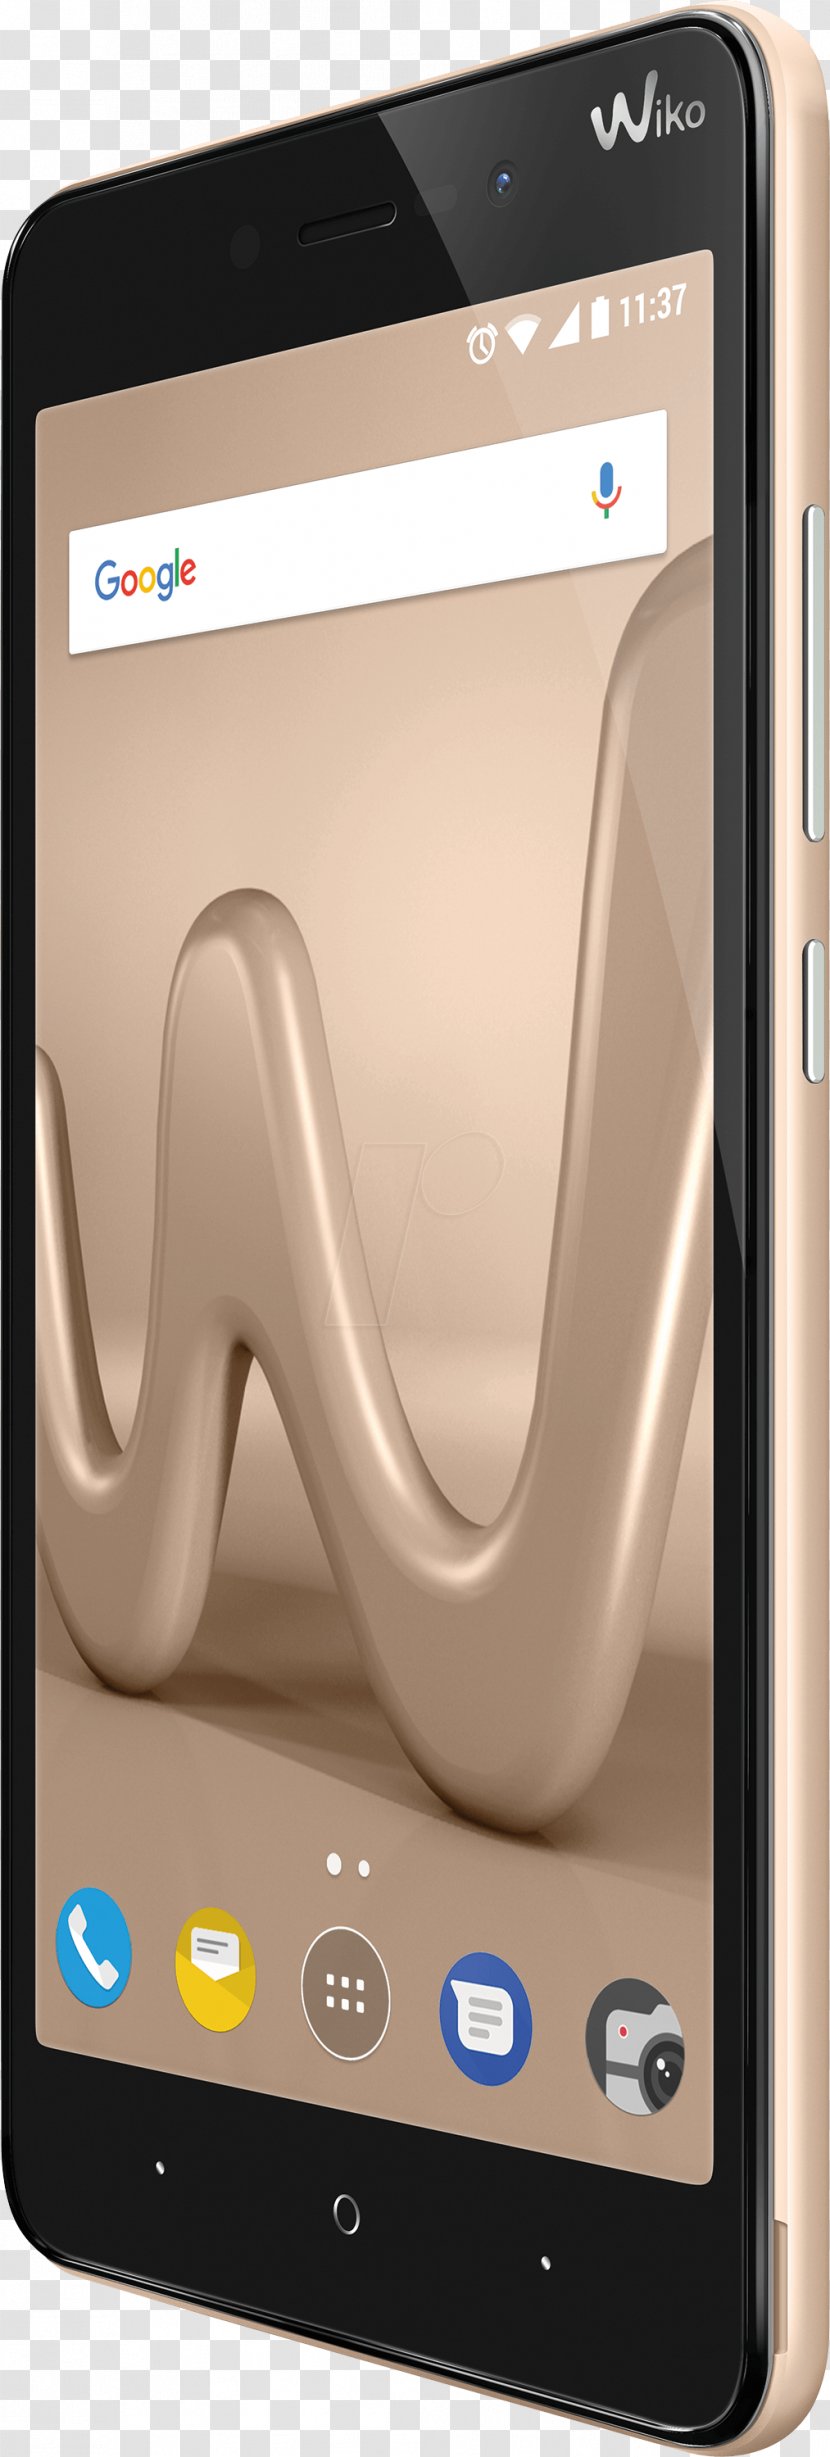 Wiko LENNY4 Plus Dual SIM 16GB Rose Gold Hardware/Electronic Smartphone Lenny 4 Black Transparent PNG